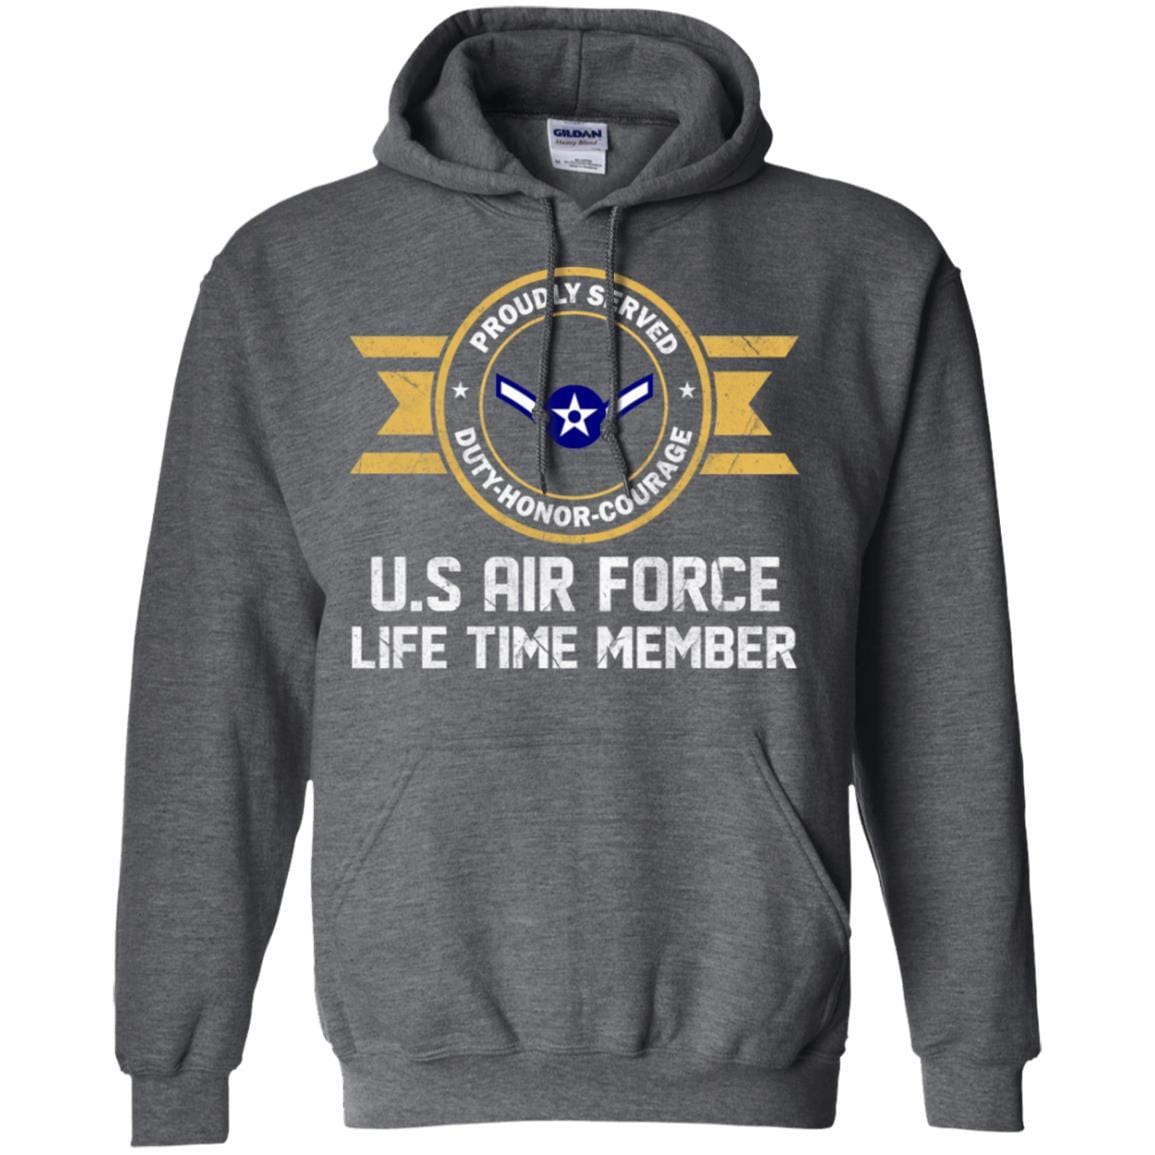 Life time member-US Air Force E-2 Airman Amn E2 Ranks Enlisted Airman Rank Men T Shirt On Front-TShirt-USAF-Veterans Nation